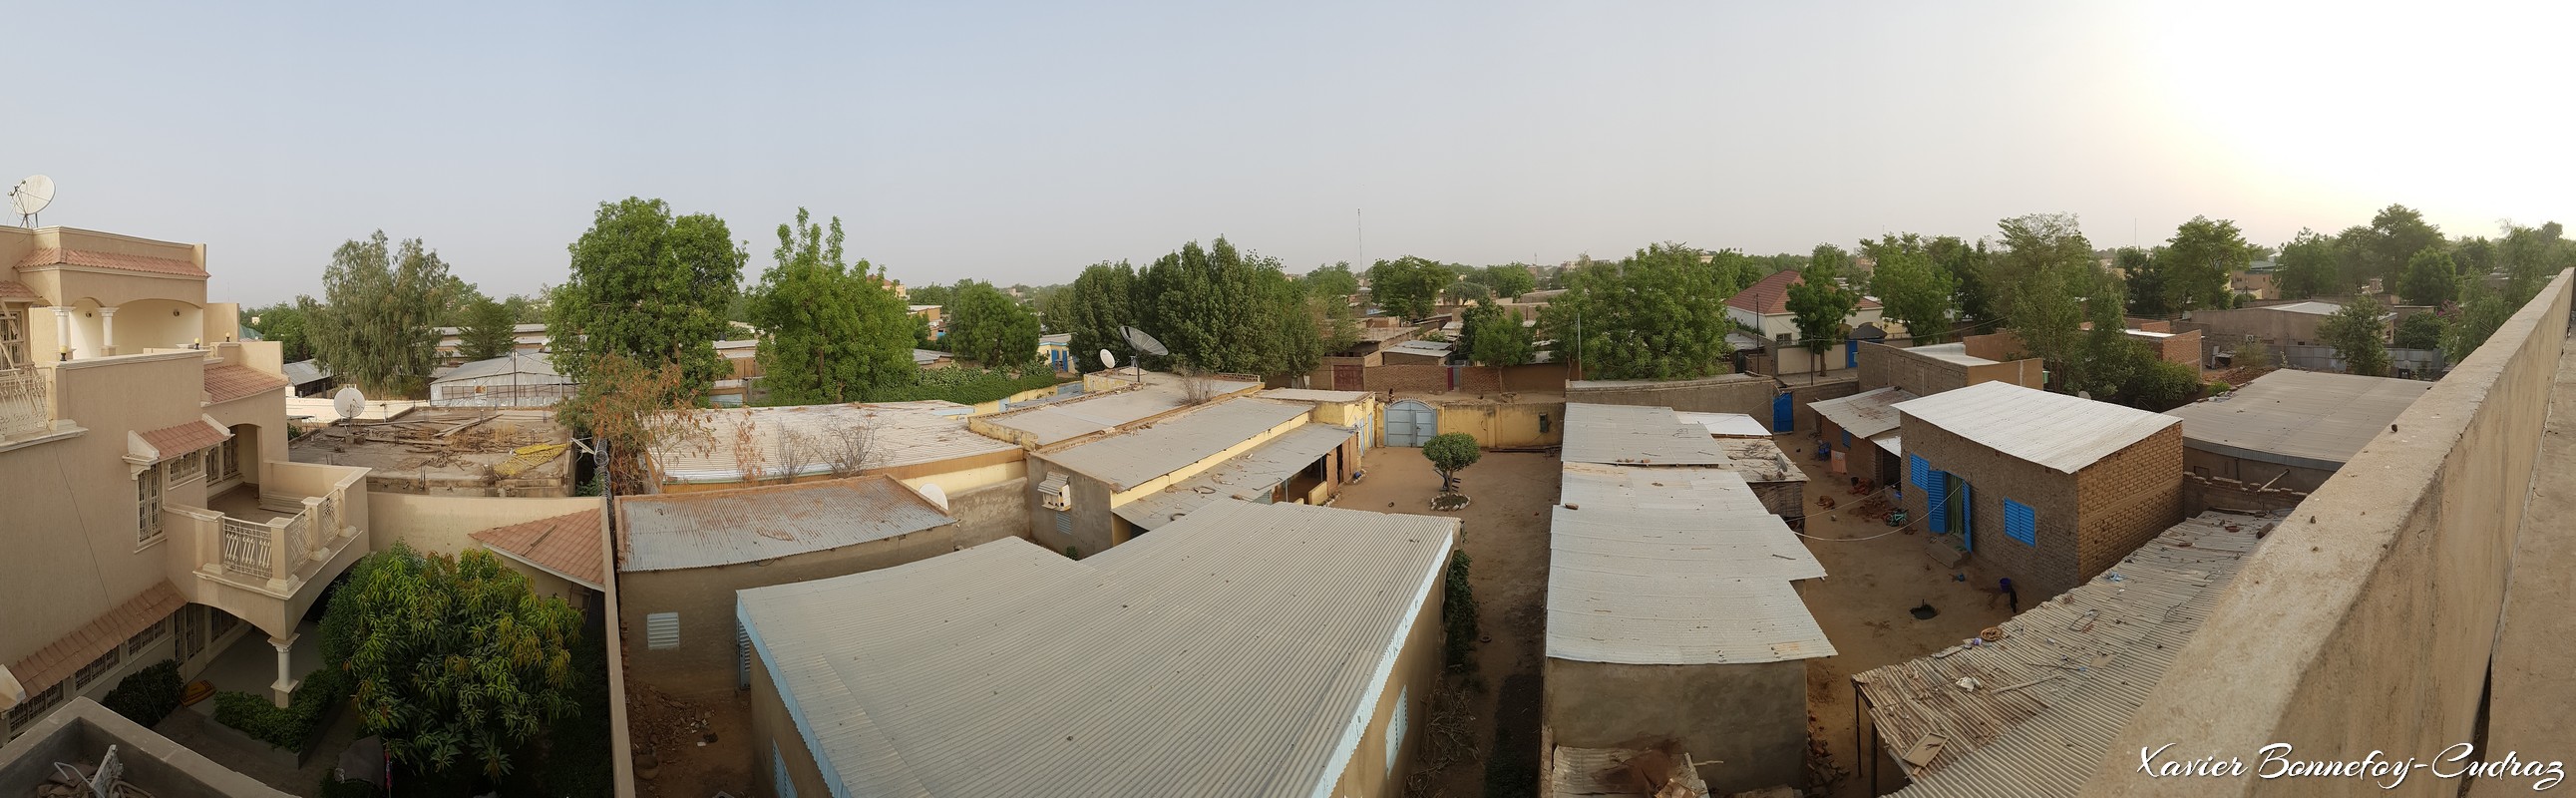 N'Djamena - Panorama Moursal
Mots-clés: geo:lat=12.10561014 geo:lon=15.07628784 geotagged Paris-Congo TCD Tchad Ville de N'Djamena N'Djamena Moursal panorama